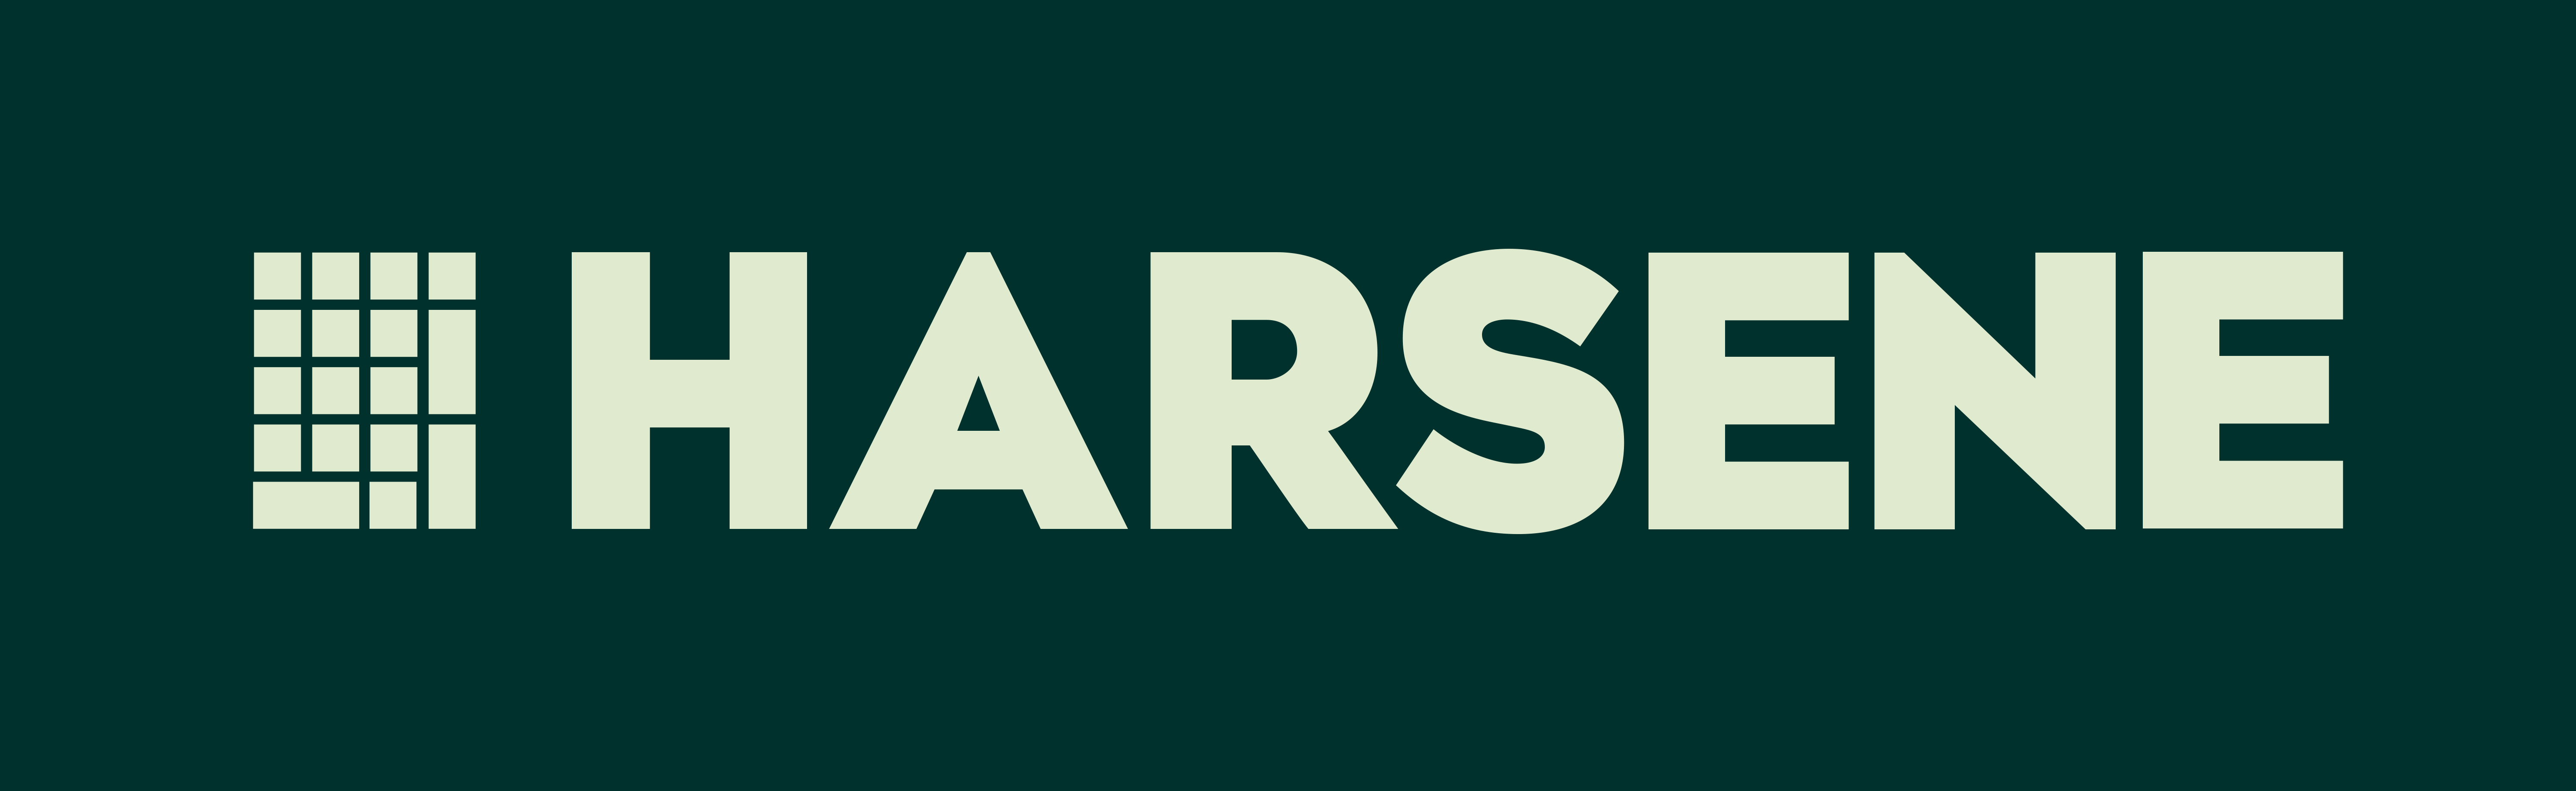 Harsene 24 - Logo de base - Vert clair sur vert foncé